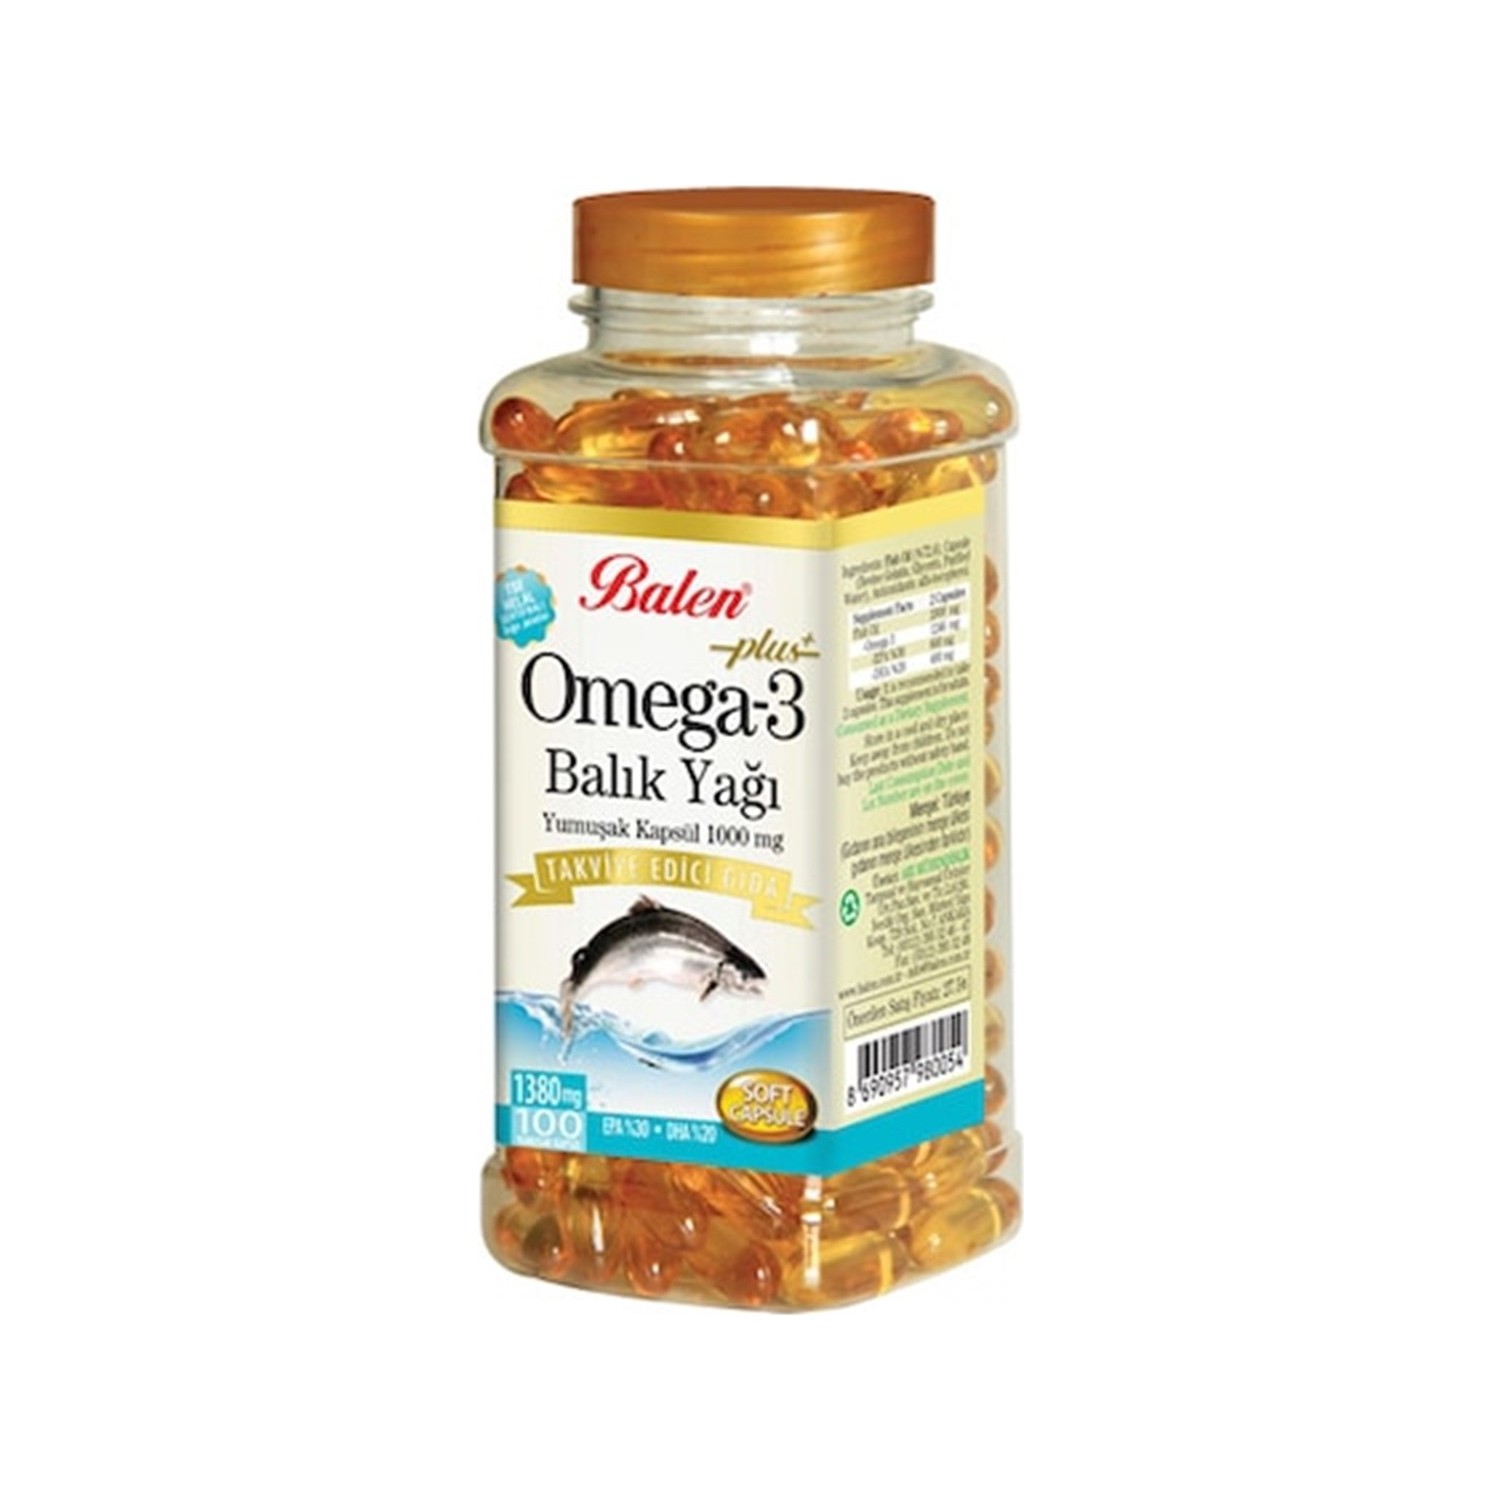 Рыбий жир Balen Omega 3, 1380 мг, 100 капсул норвежский рыбий жир balen omega 3 триглицерид 1380 мг 200 капсул